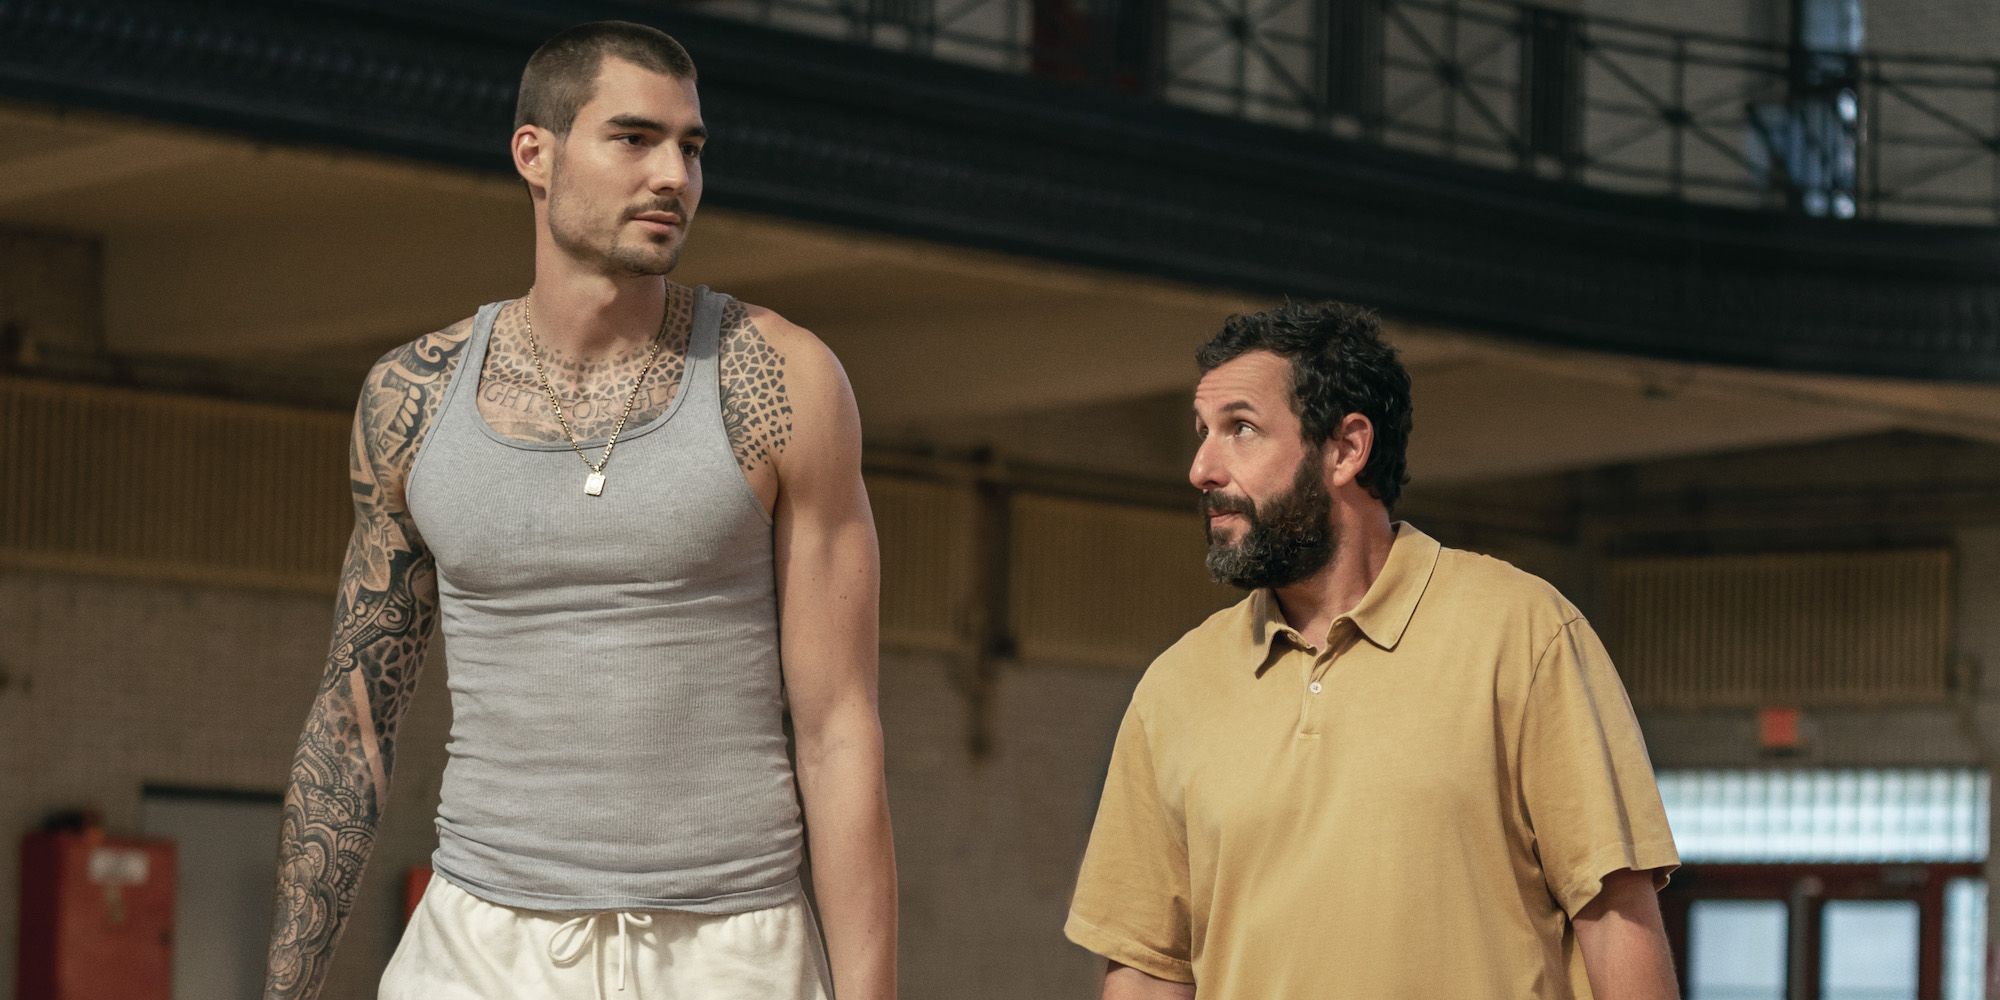 Review: Sandler's got game in basketball movie 'Hustle